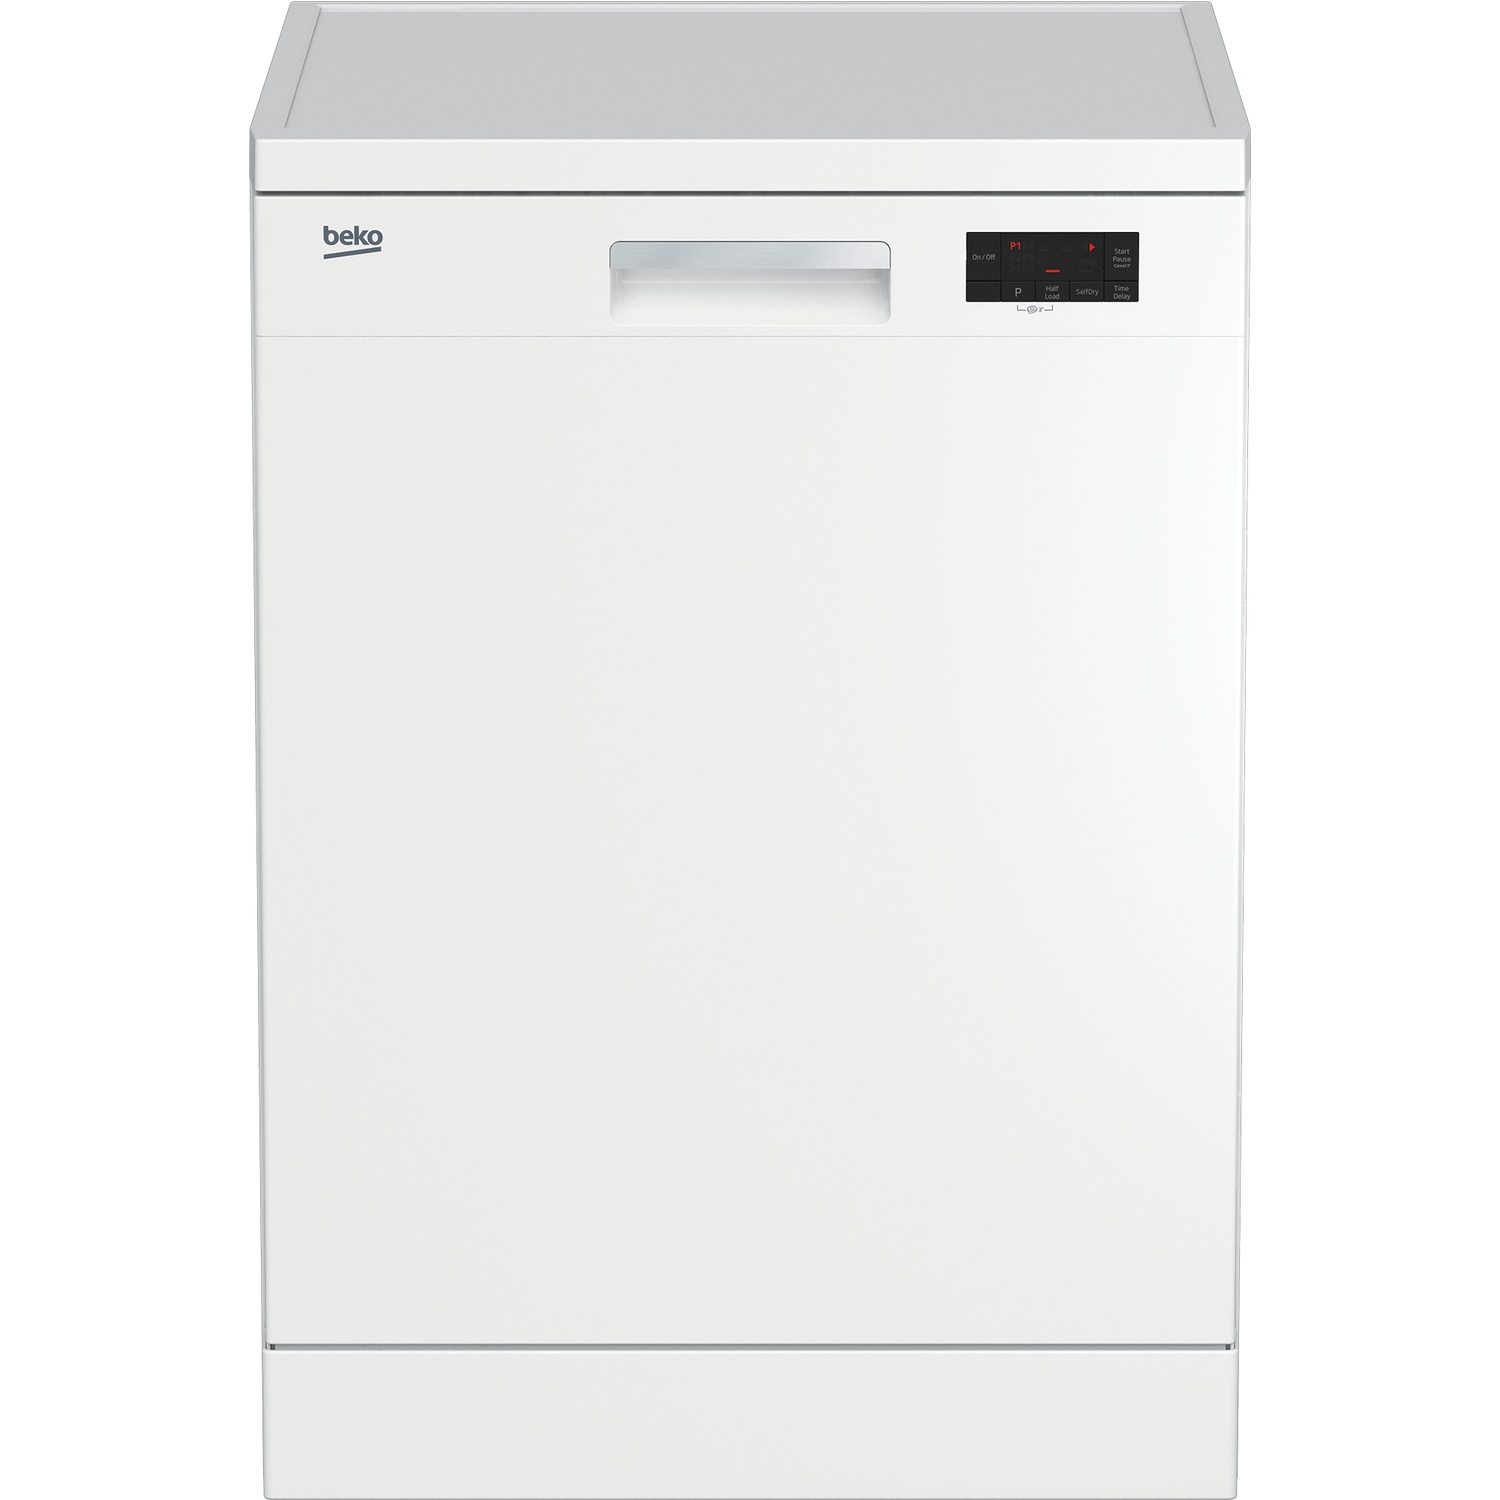 Refurbished Beko DFN16430W 14 Place Freestanding Dishwasher White